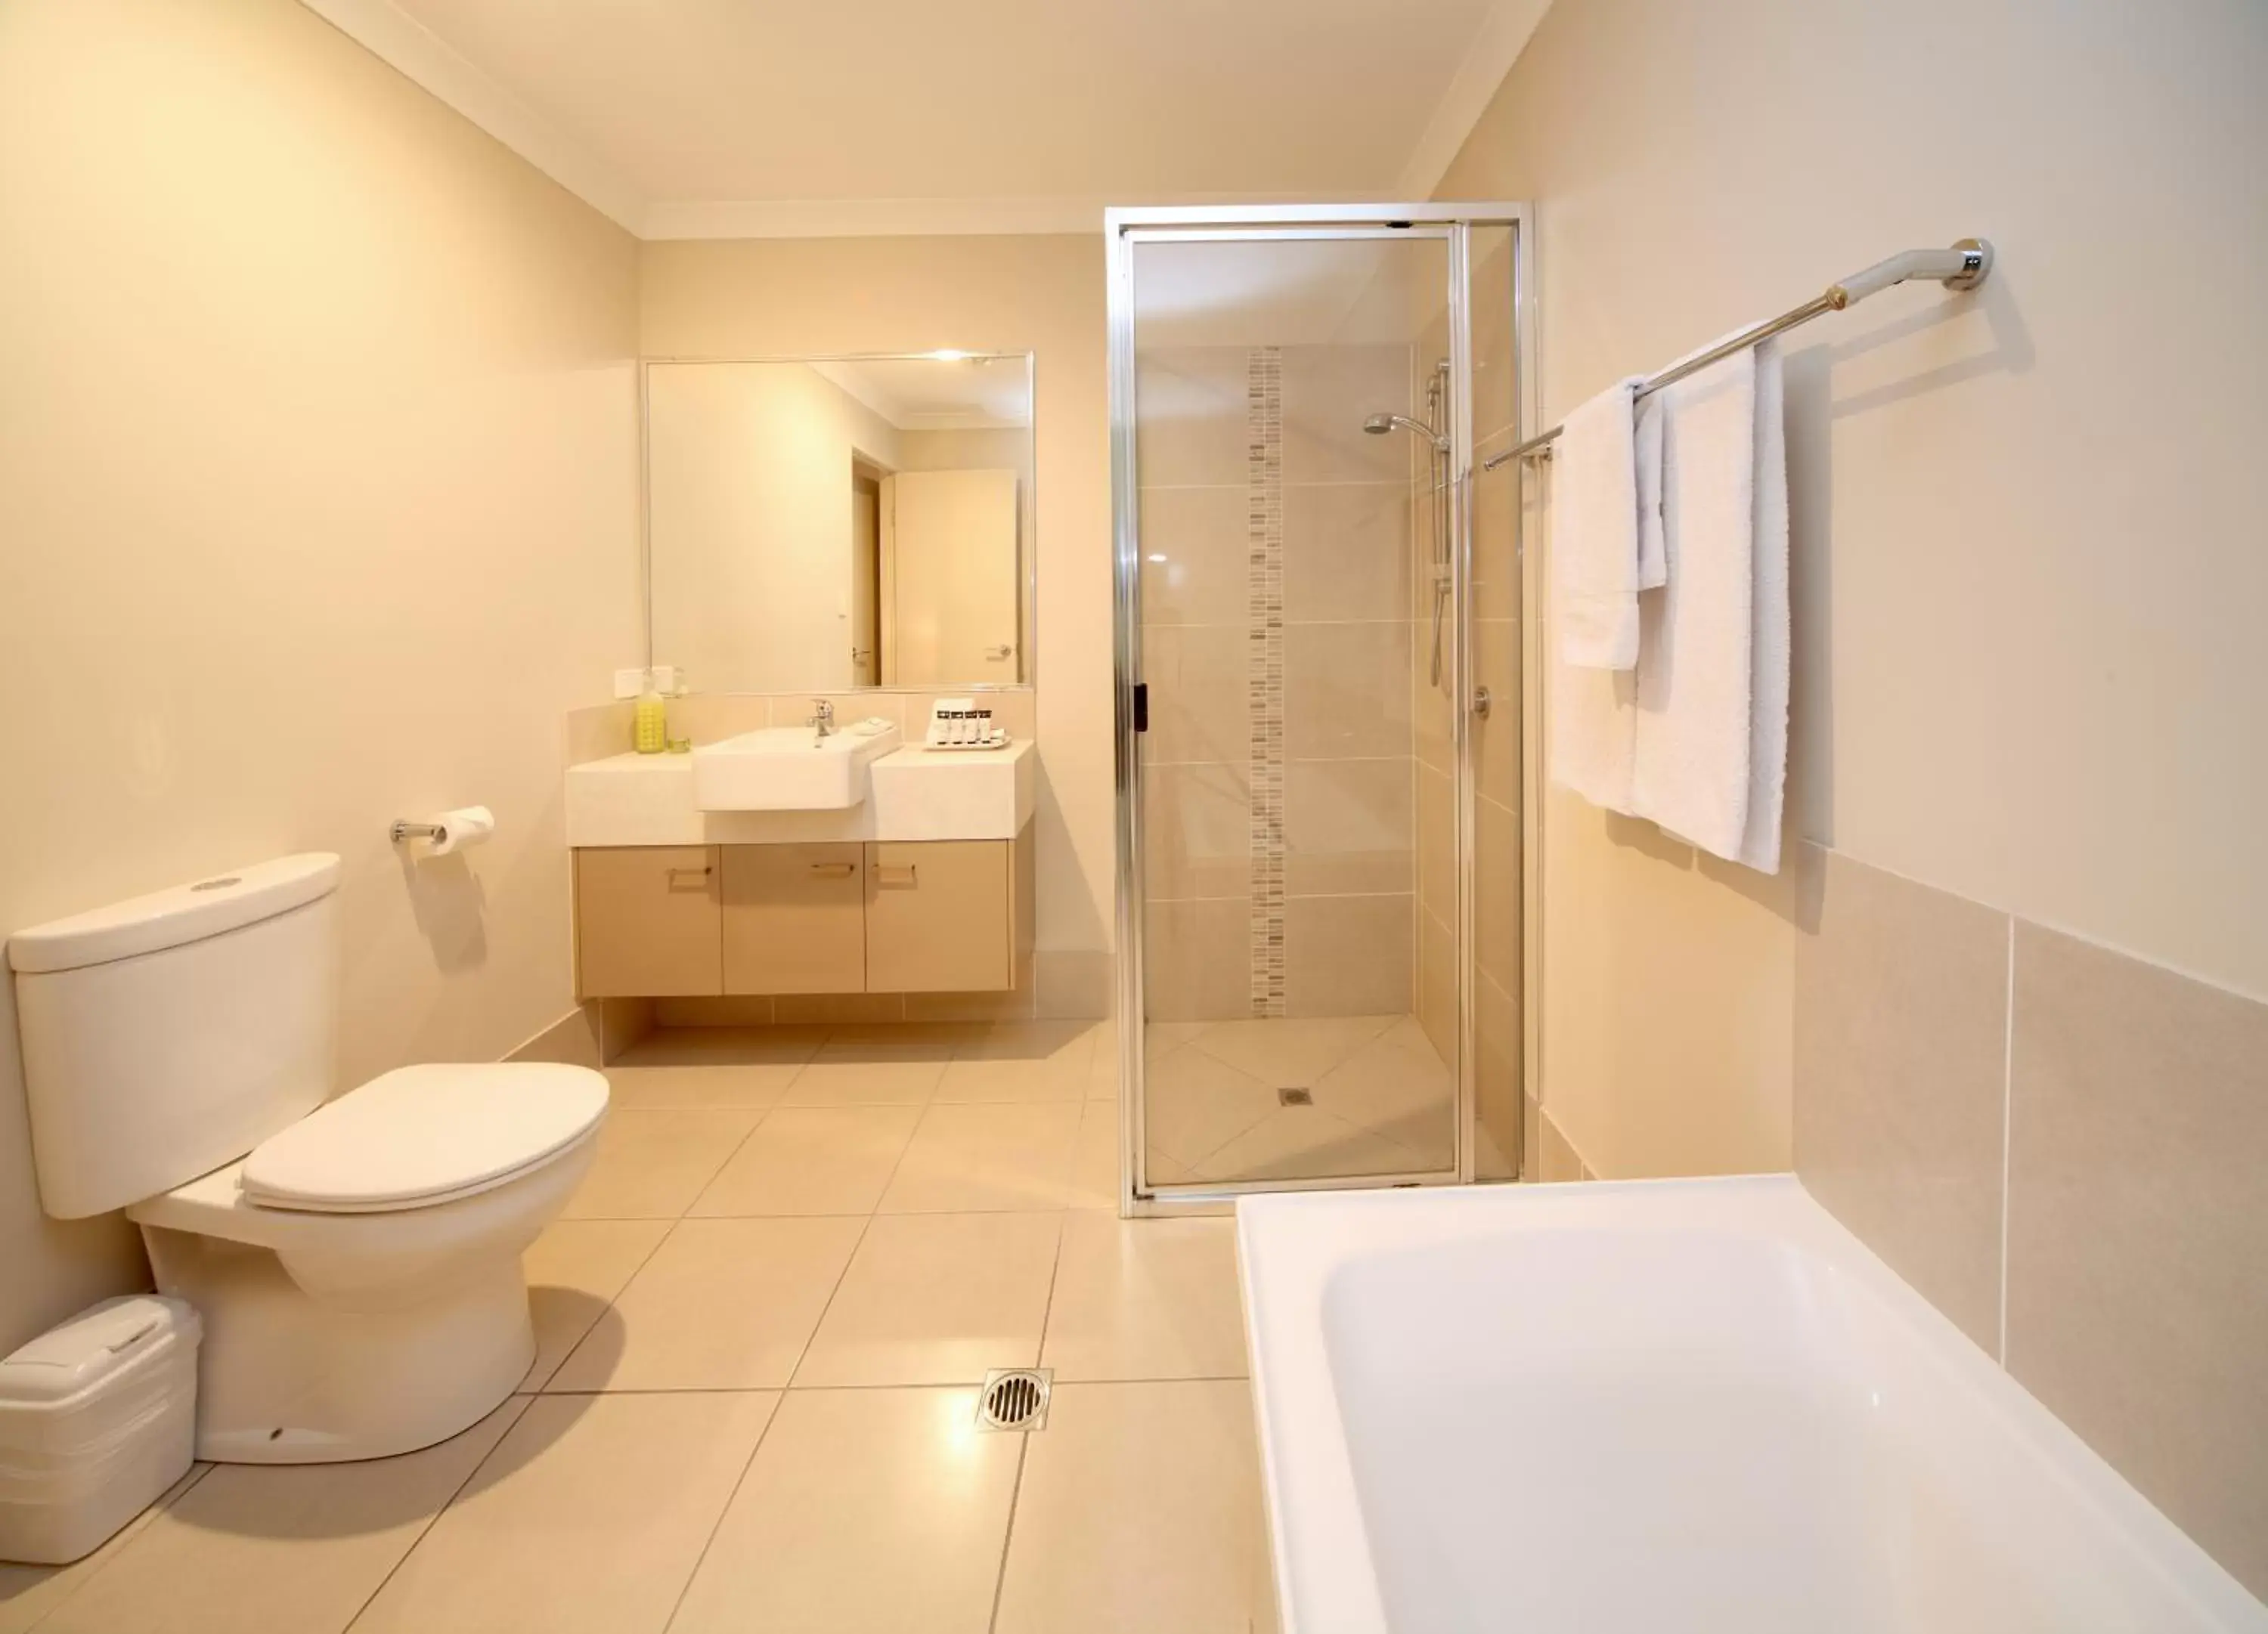 Bathroom in Direct Hotels - Villas on Rivergum